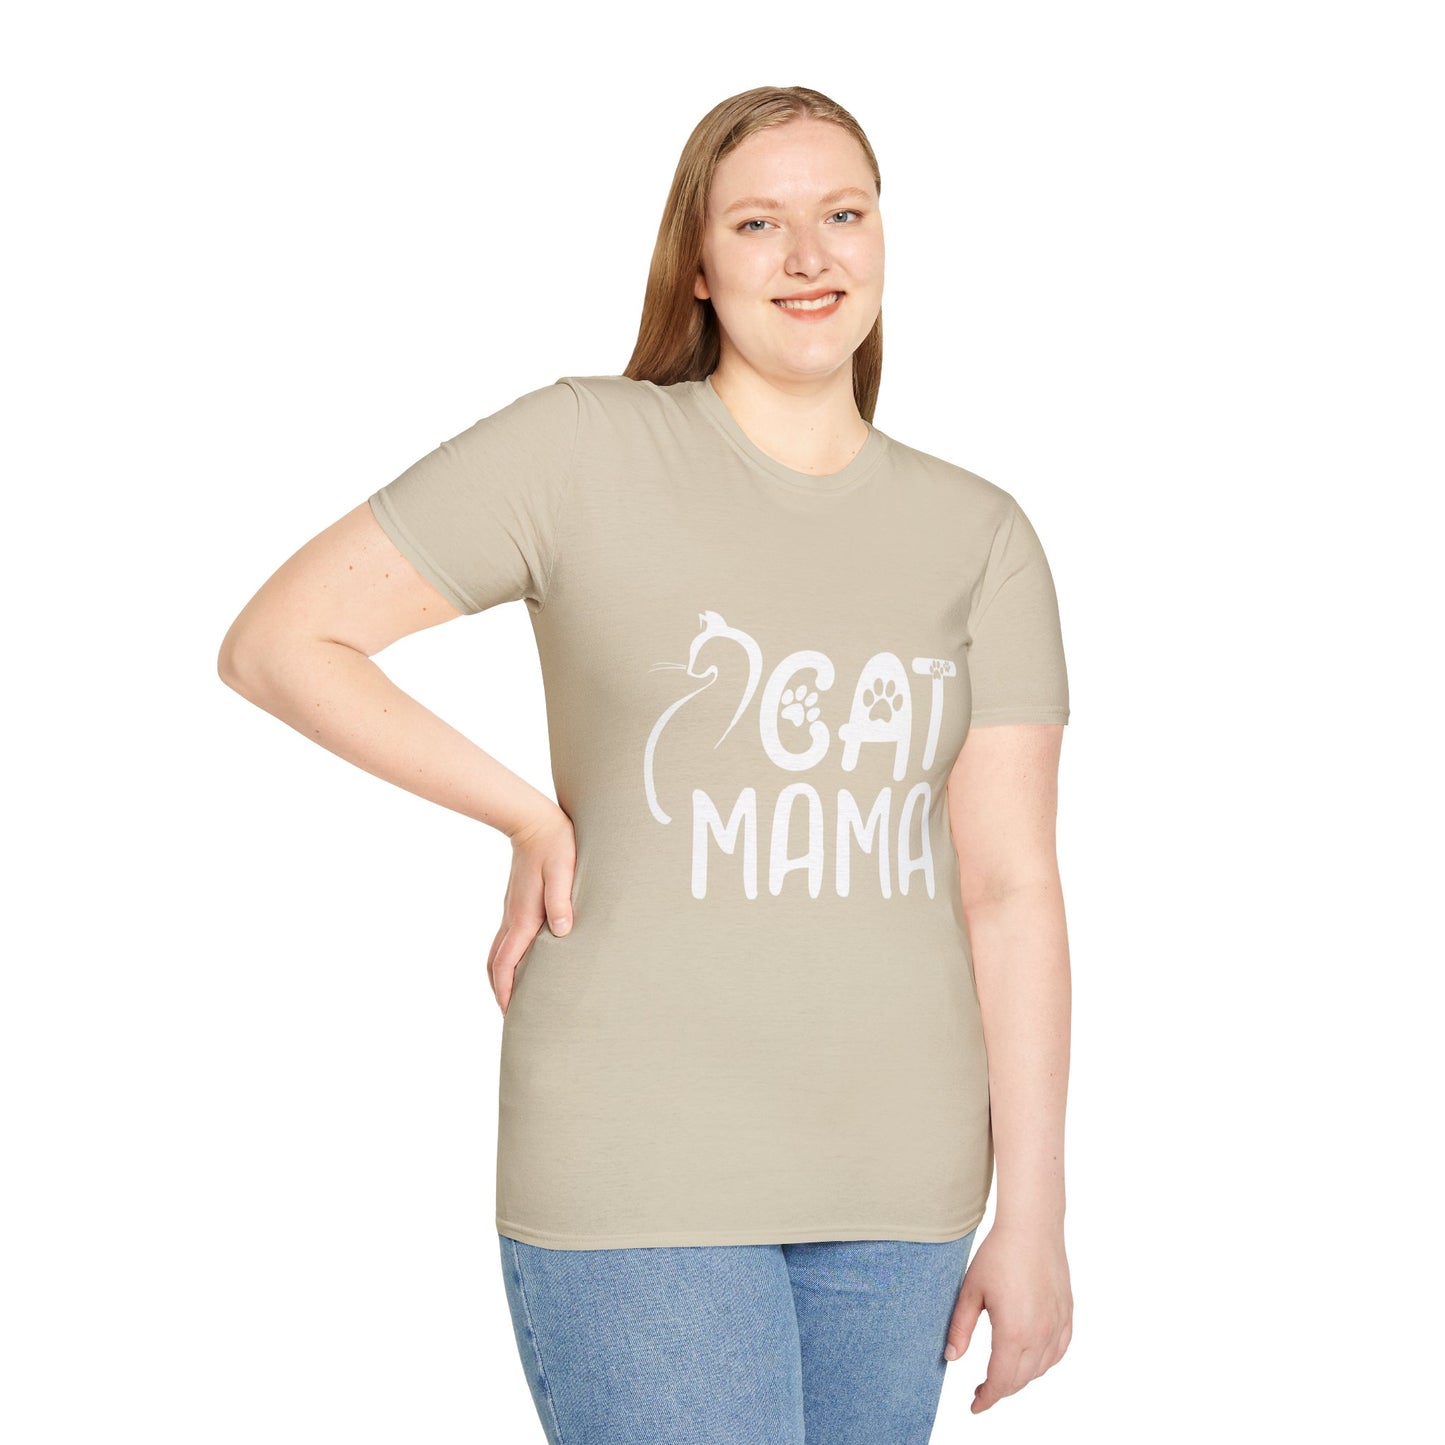 Cat Mamat Cat T-Shirts for Feline-loving Fashionistas!